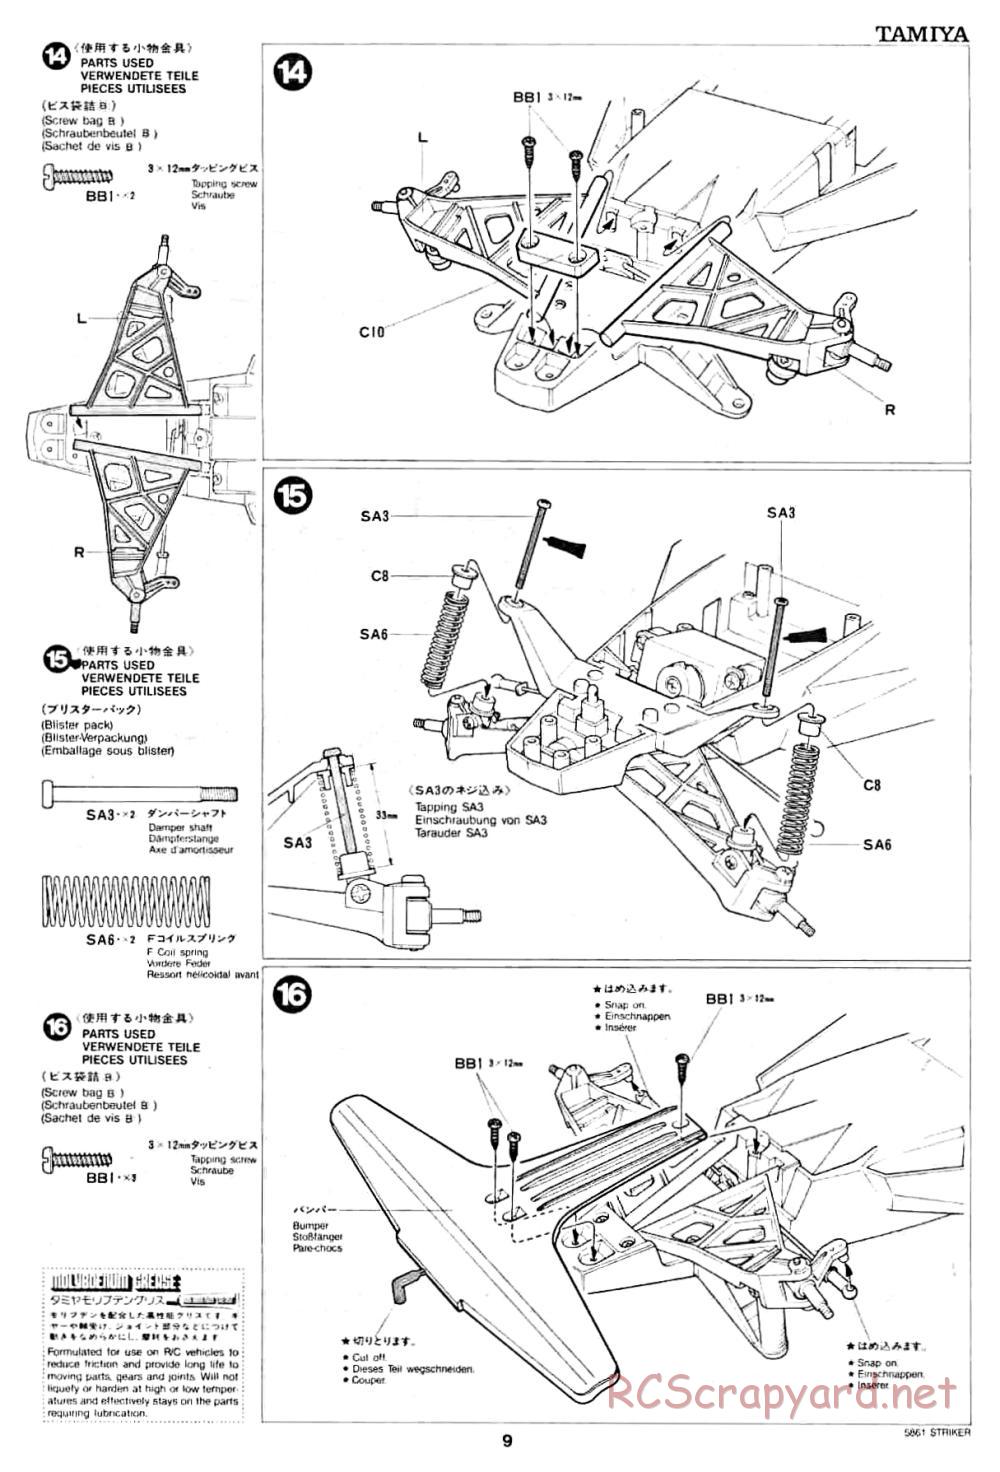 Tamiya - Striker - 58061 - Manual - Page 9